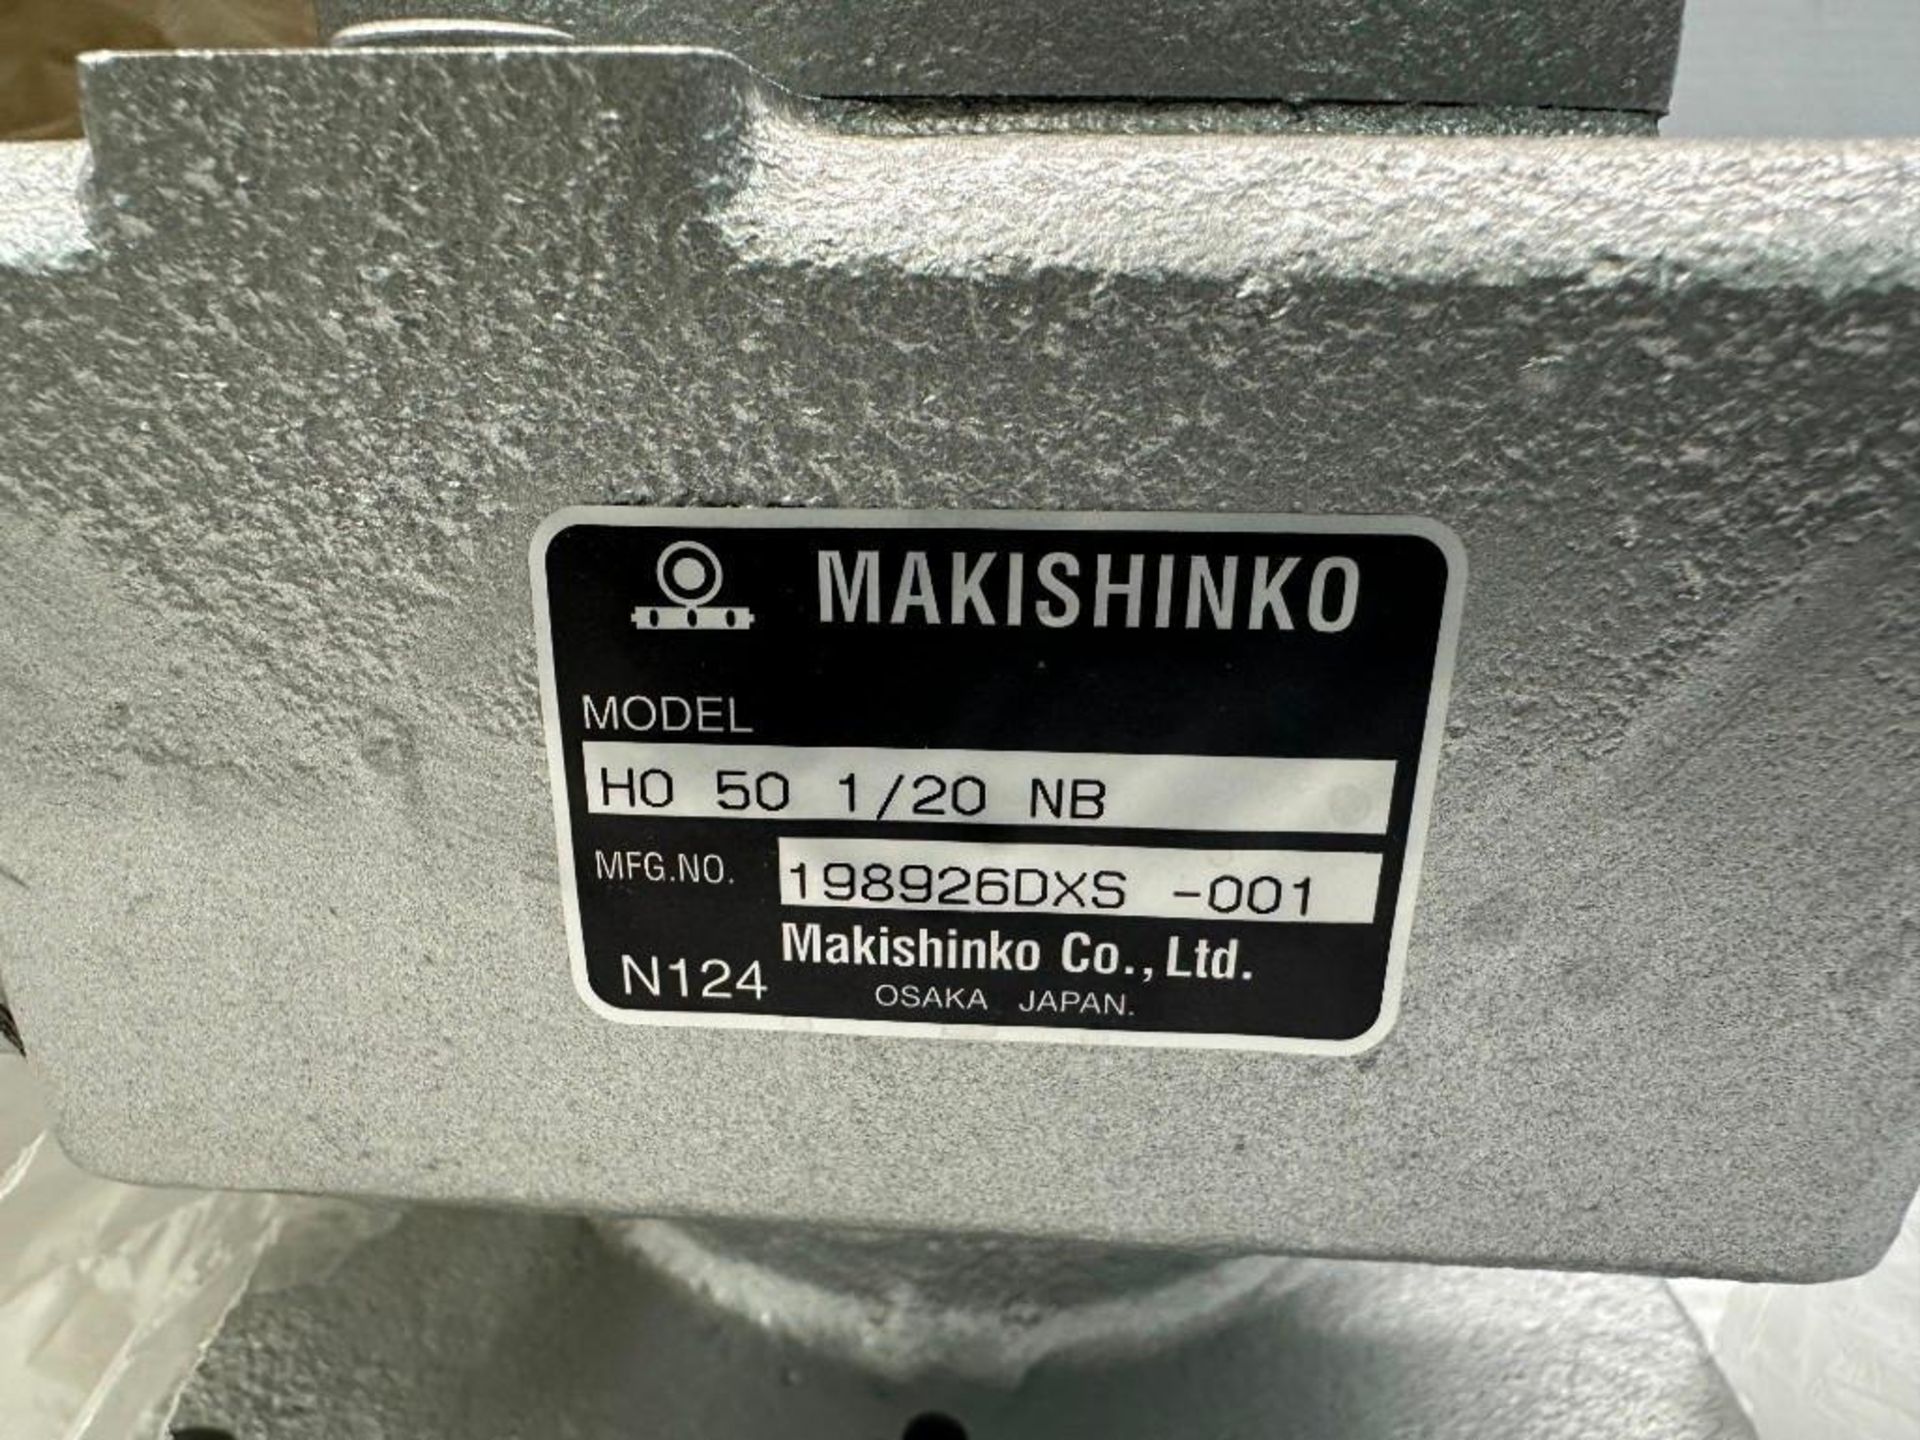 Makishinko #H0 50 1/20 NB Gear Reducer - Image 5 of 5